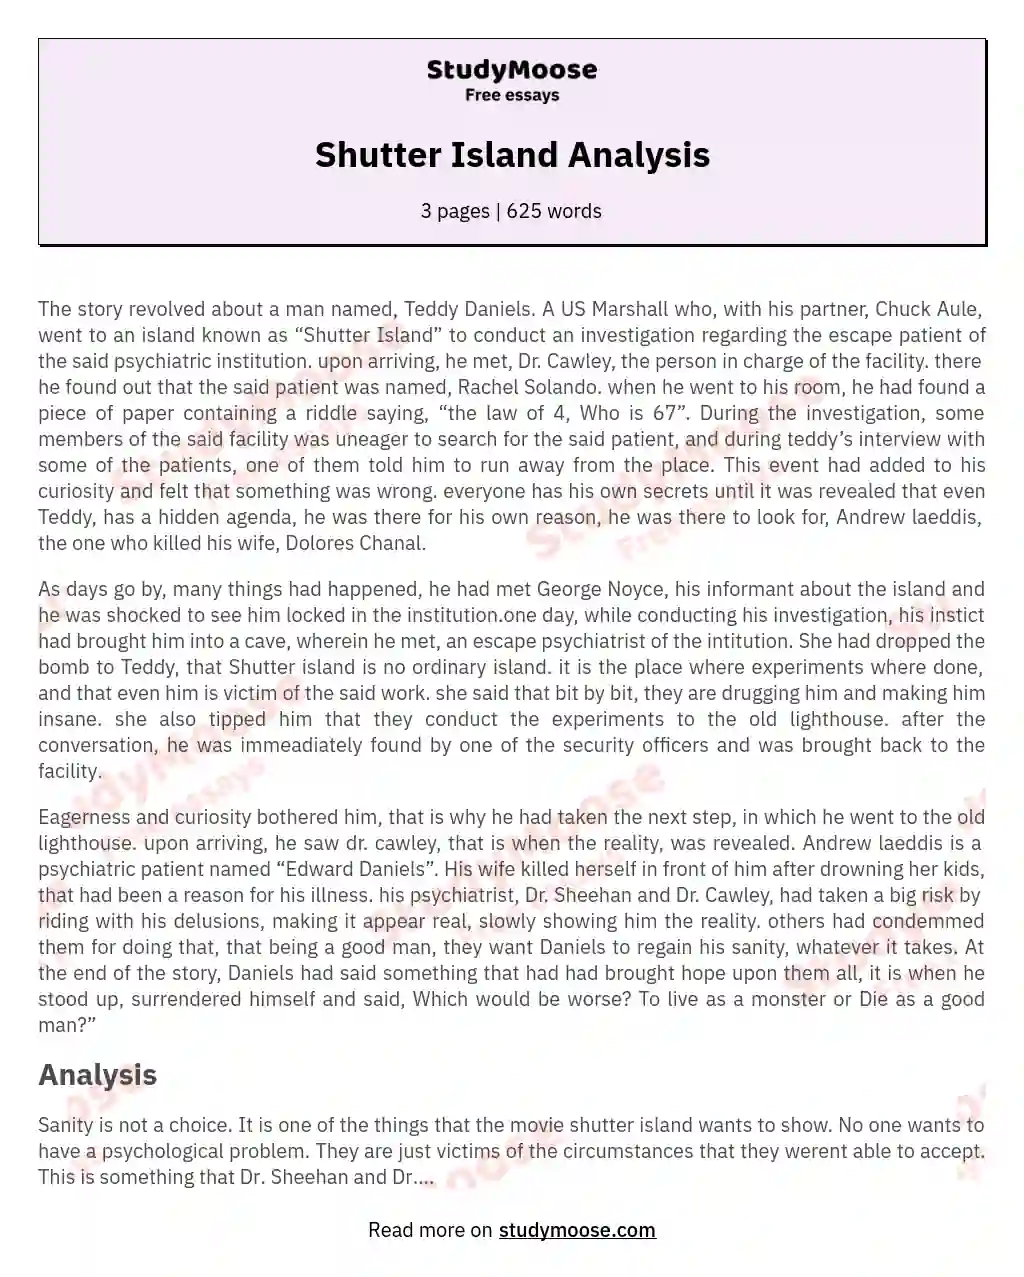 shutter island movie review essay